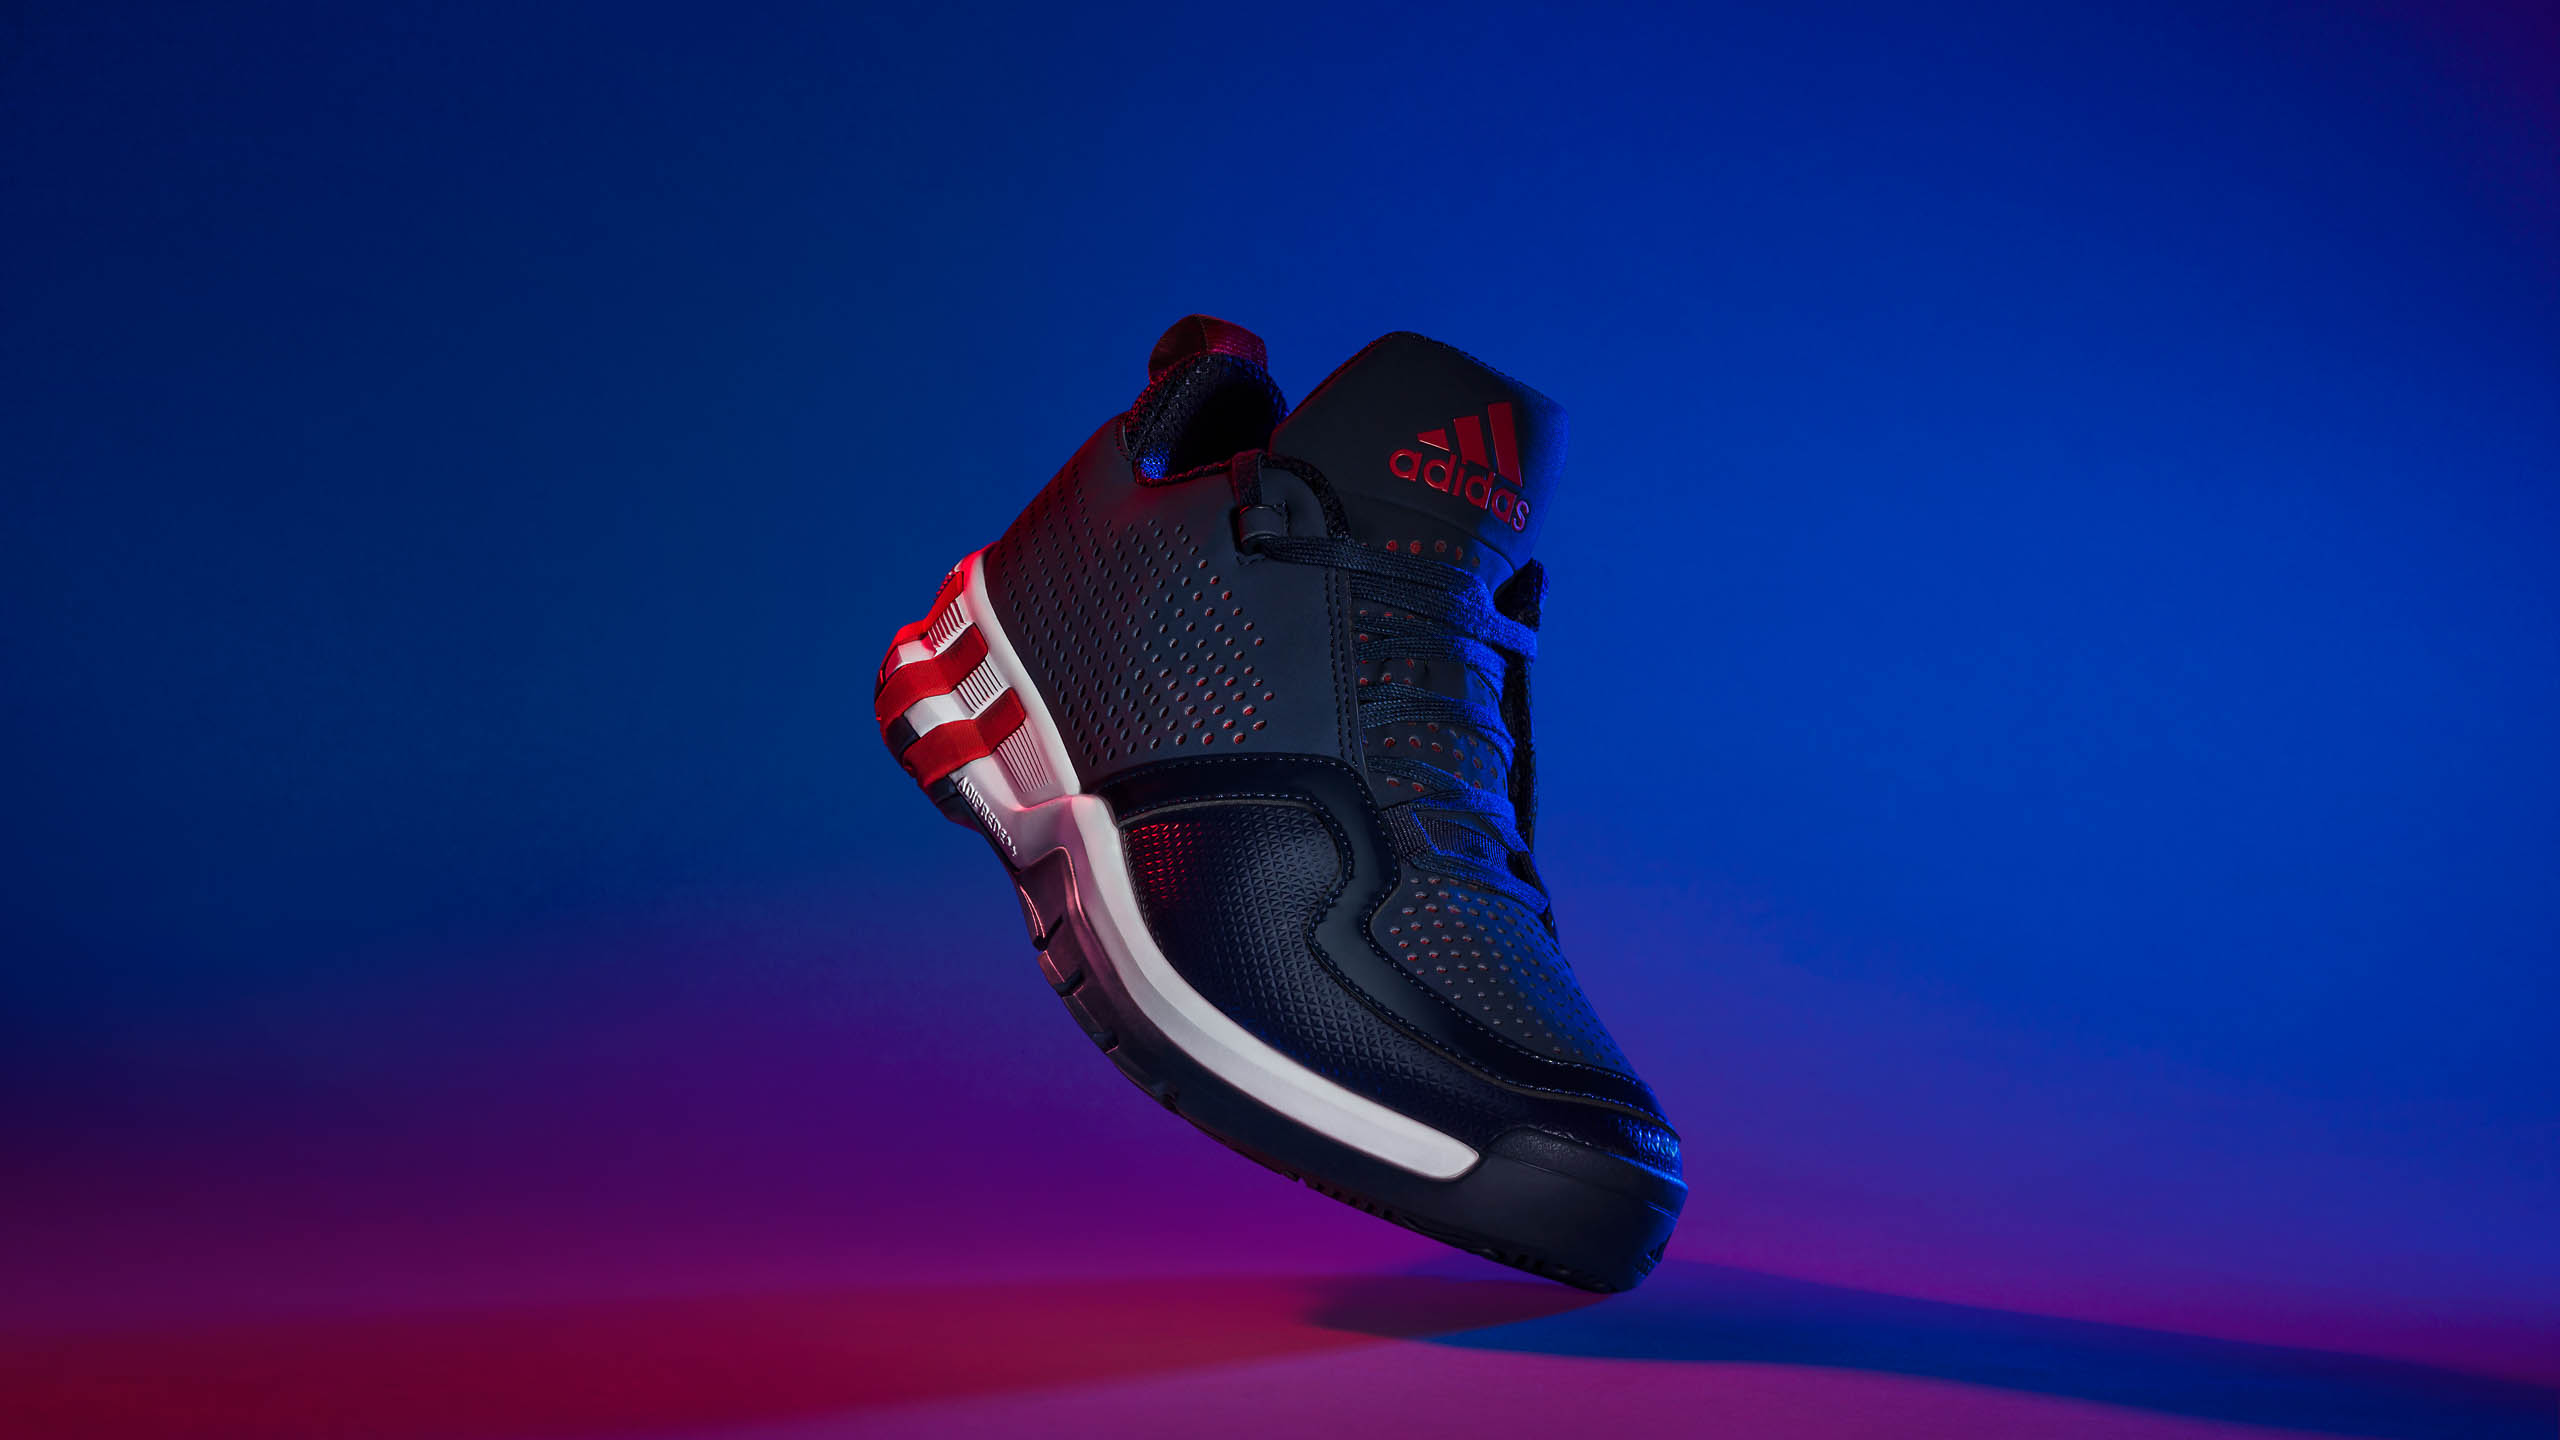 Adidas John Wall 2 basketball shoe